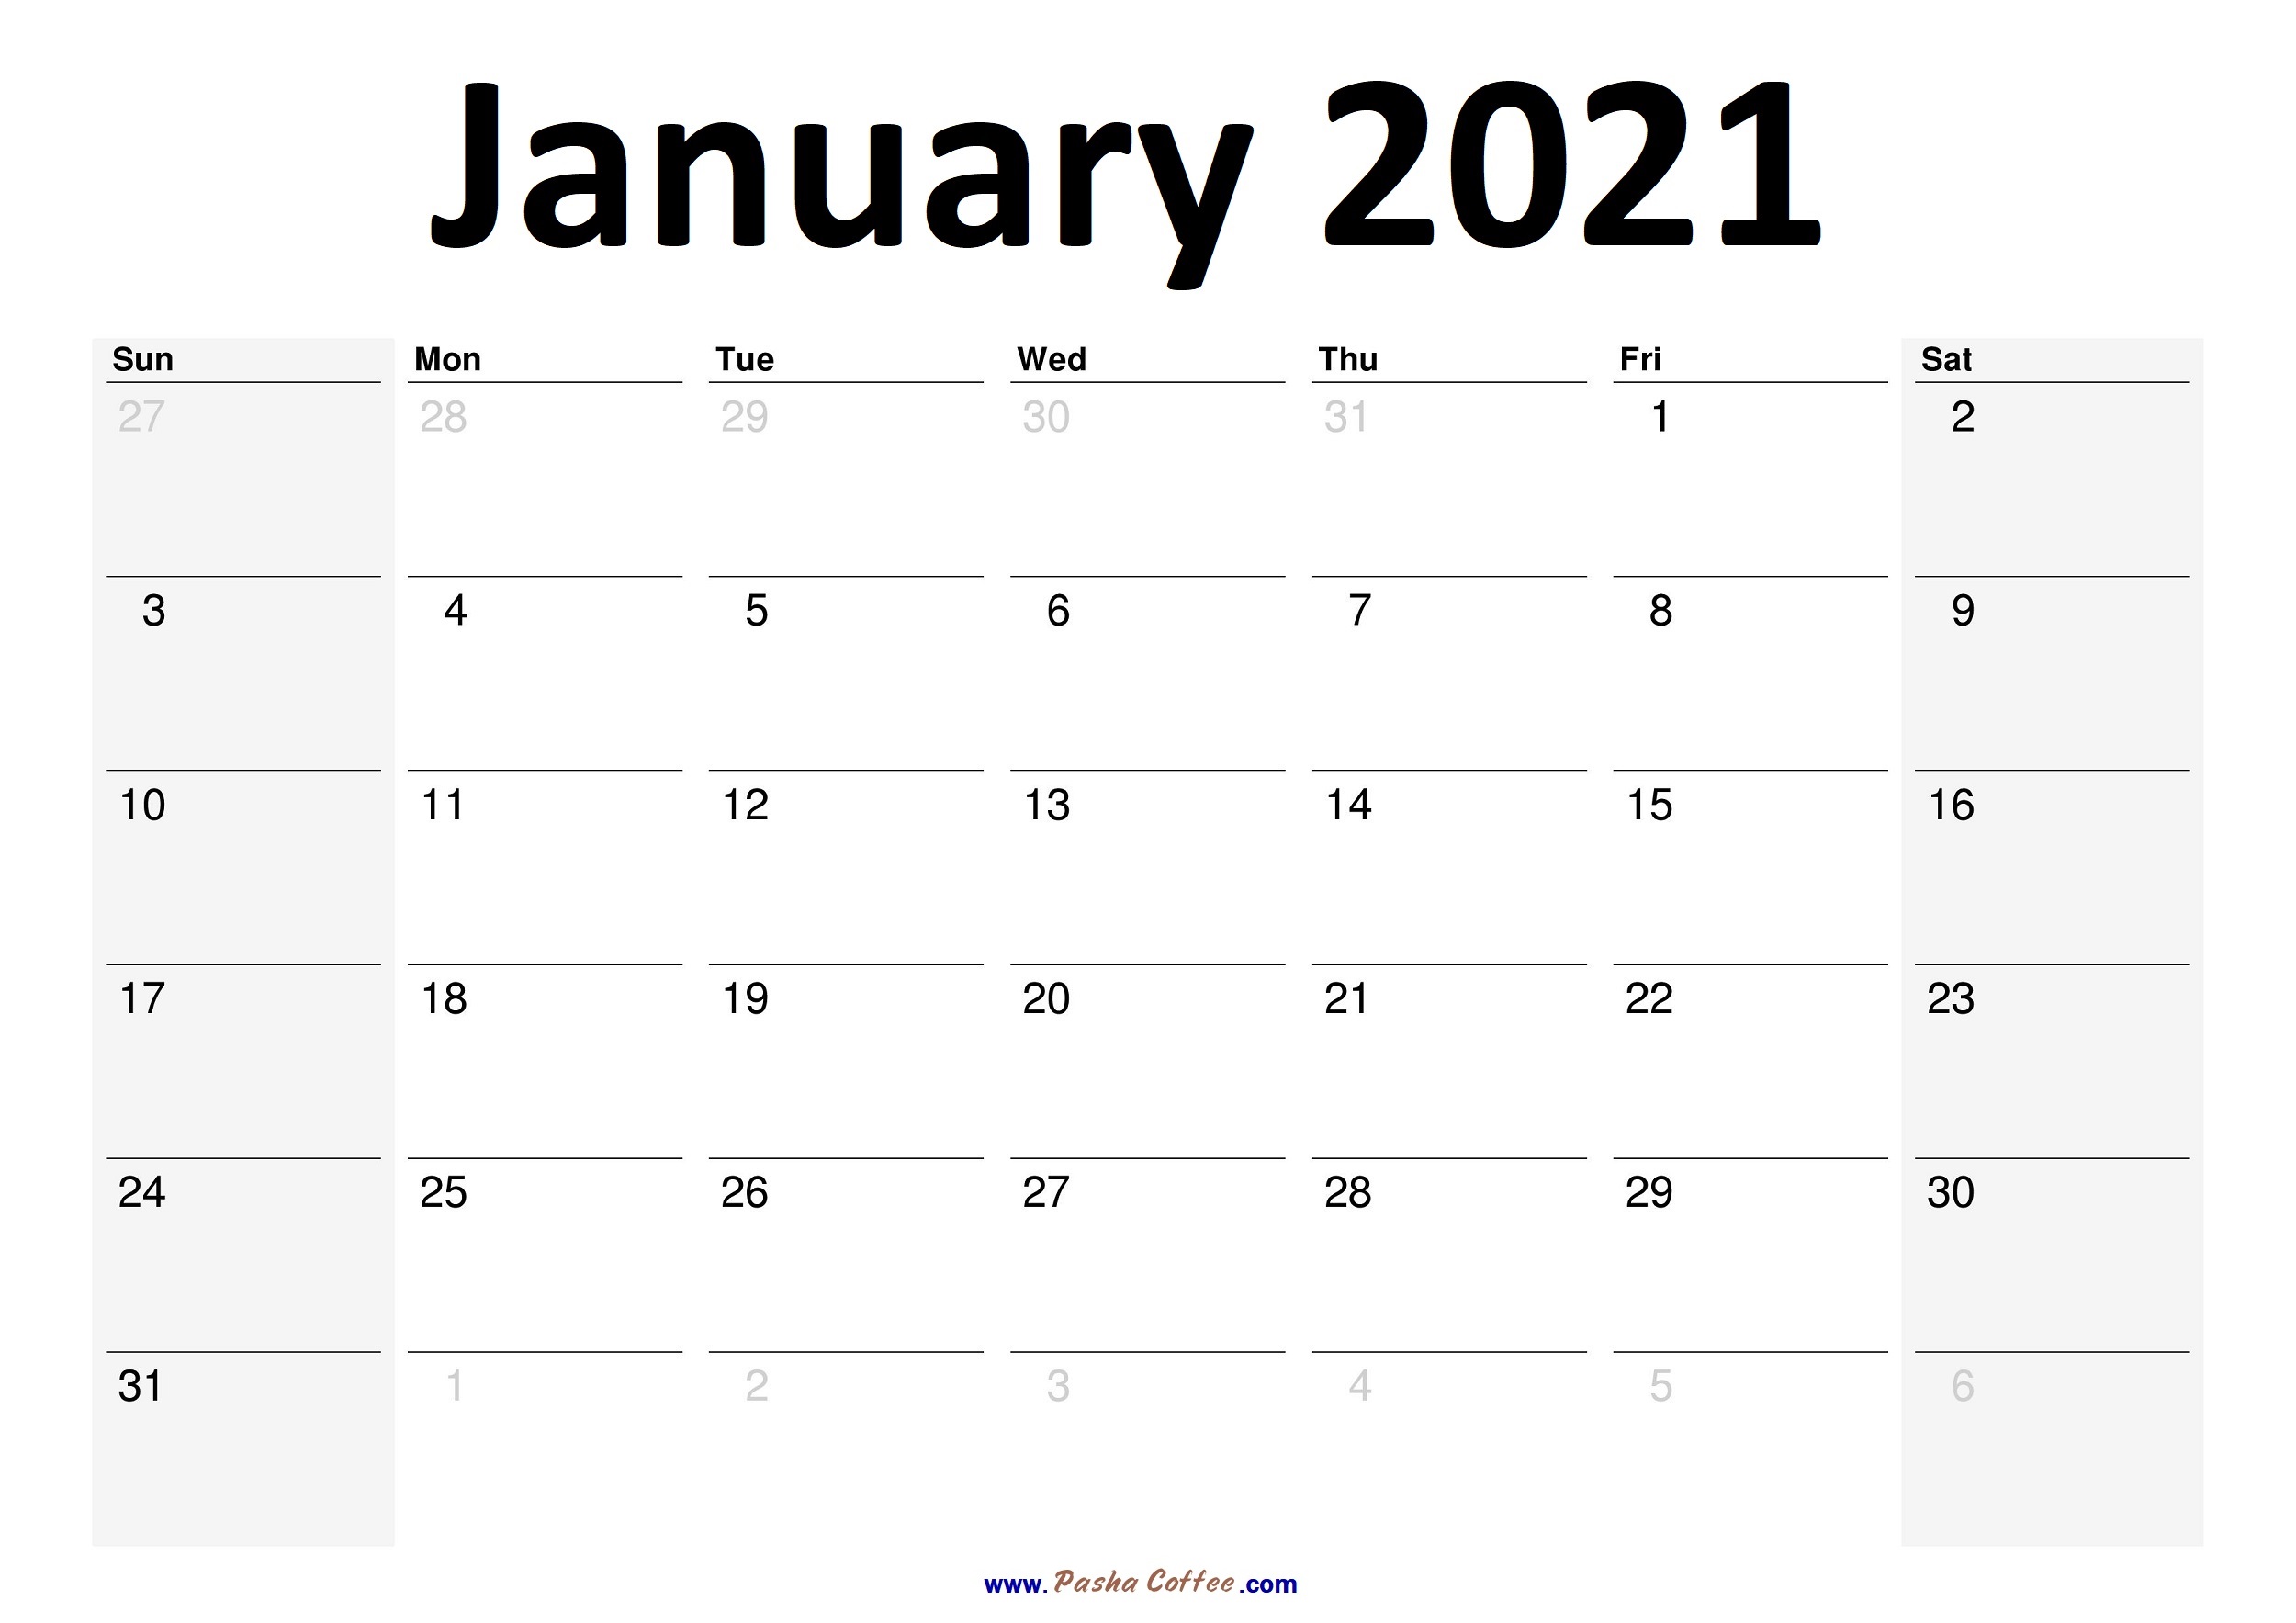 2021-January-Calendar-Planner01